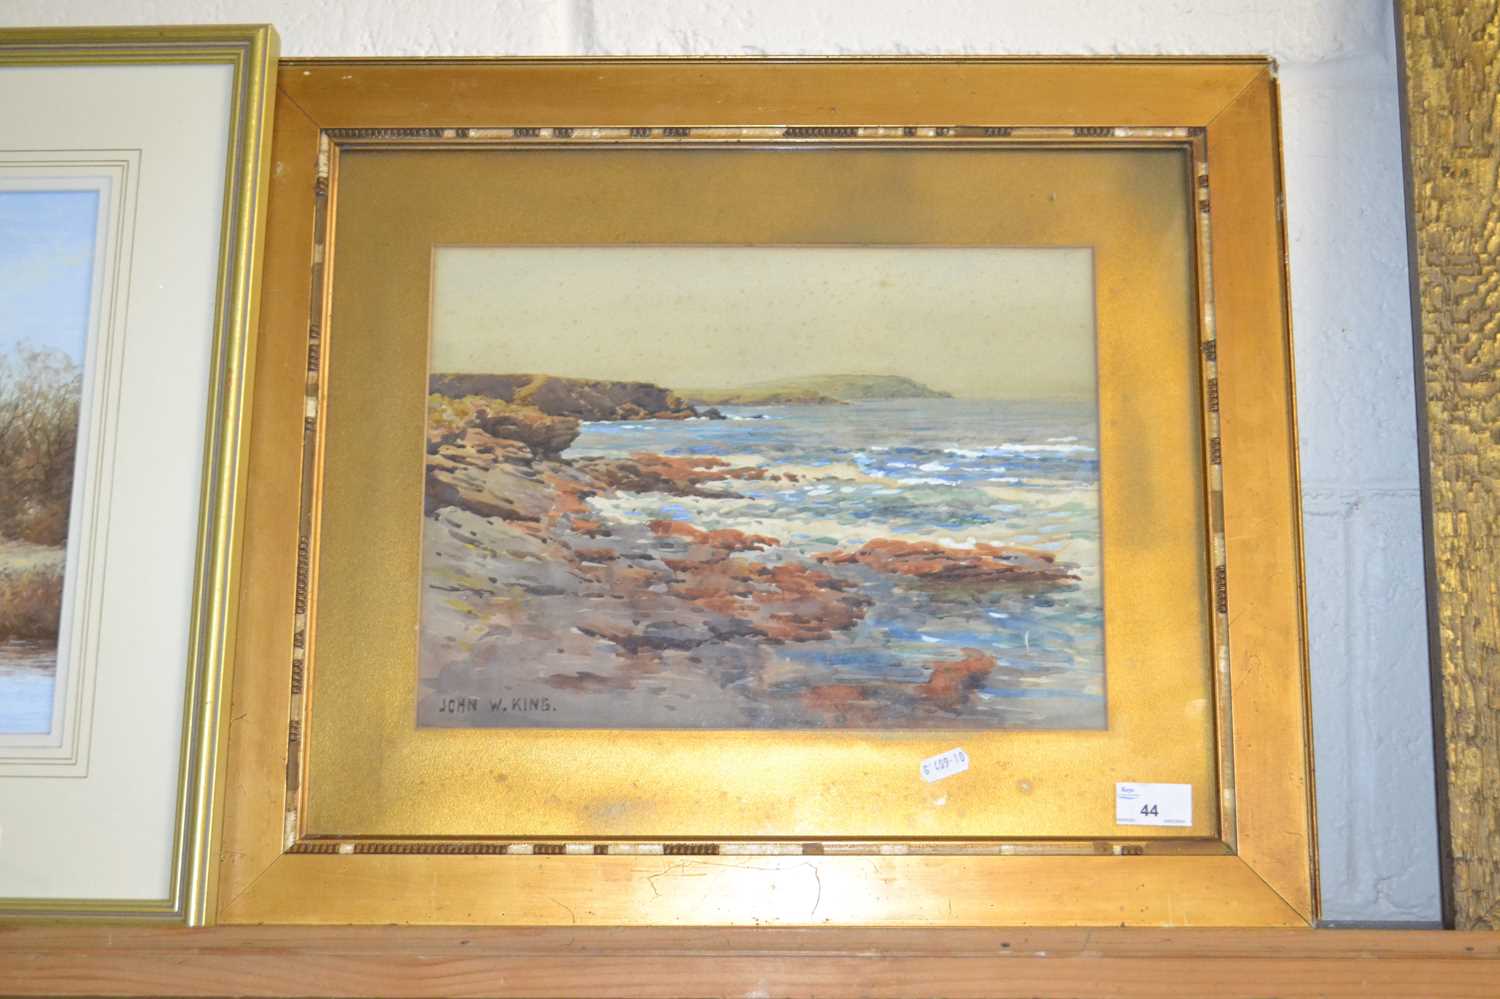 John King - Study of a coastal scene, watercolour, framed and glazed